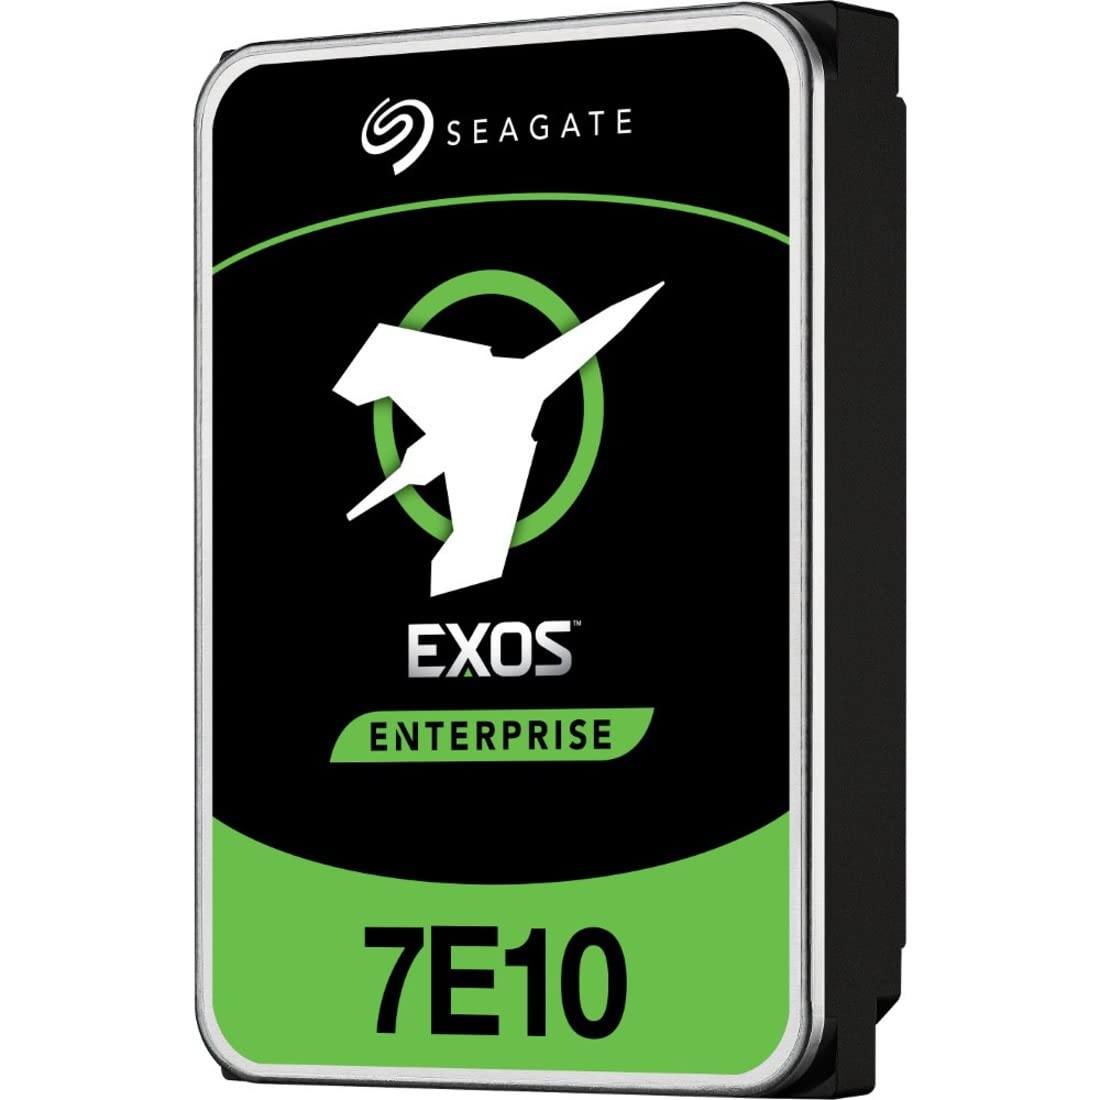 Seagate Exos 7E10 ST2000NM001B 2 TB ハードドライブ - 内蔵 - SAS 12Gbs SAS - ストレージシステムビデ